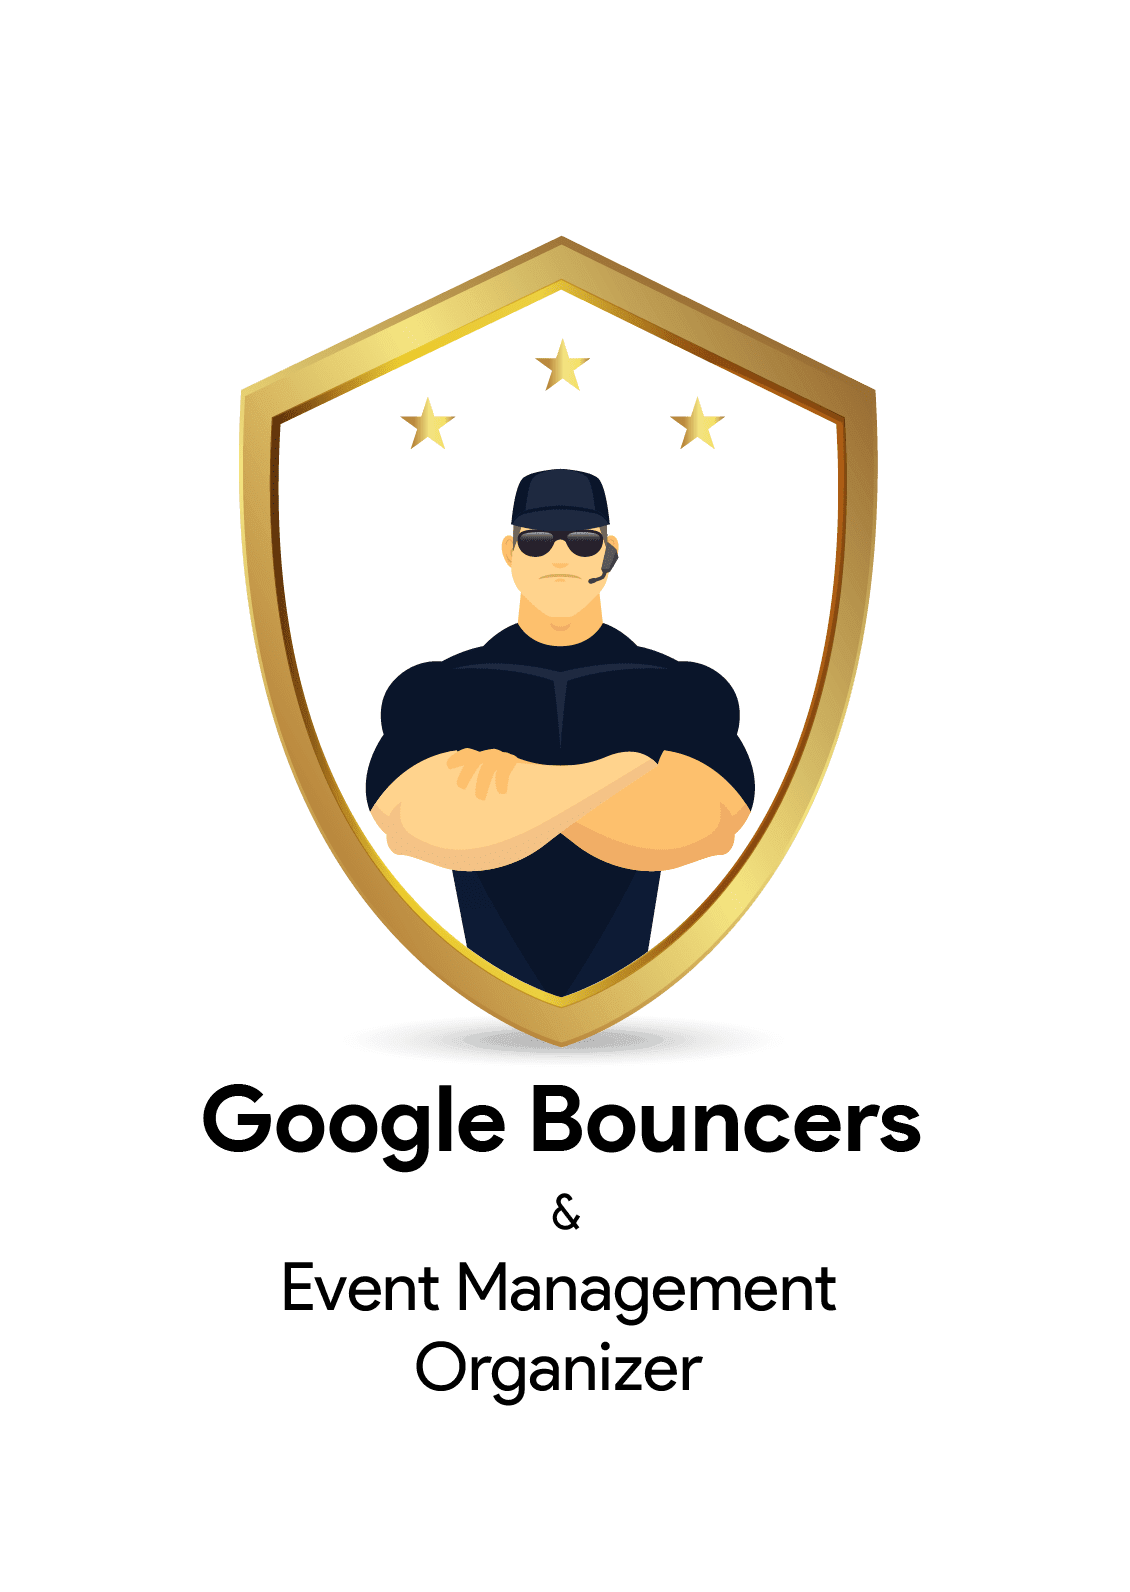 Google Bouncers